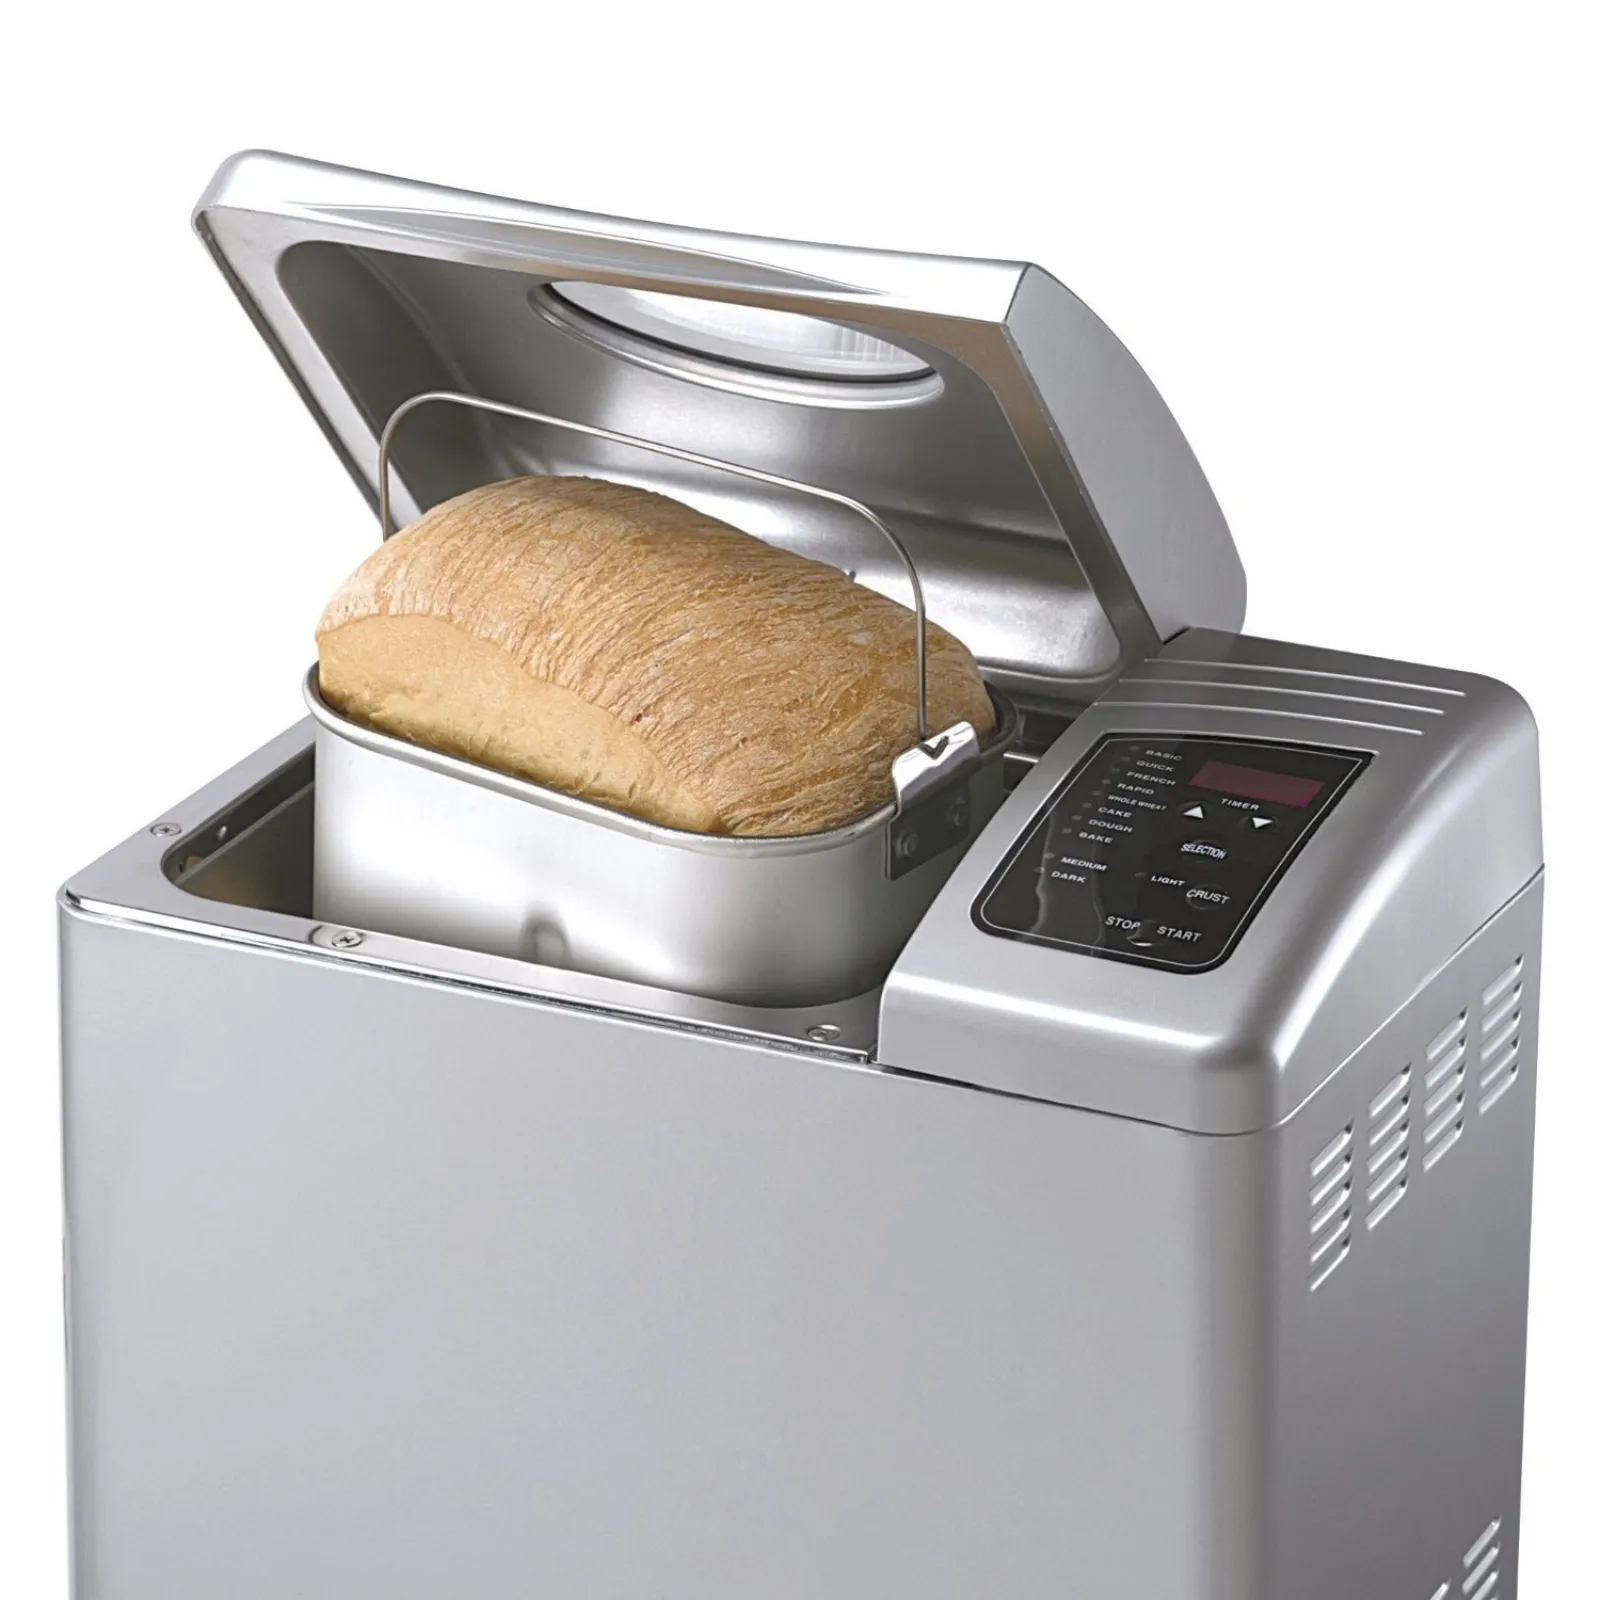 Macchine per pane per celiaci: modelli per fare pane senza glutine in casa